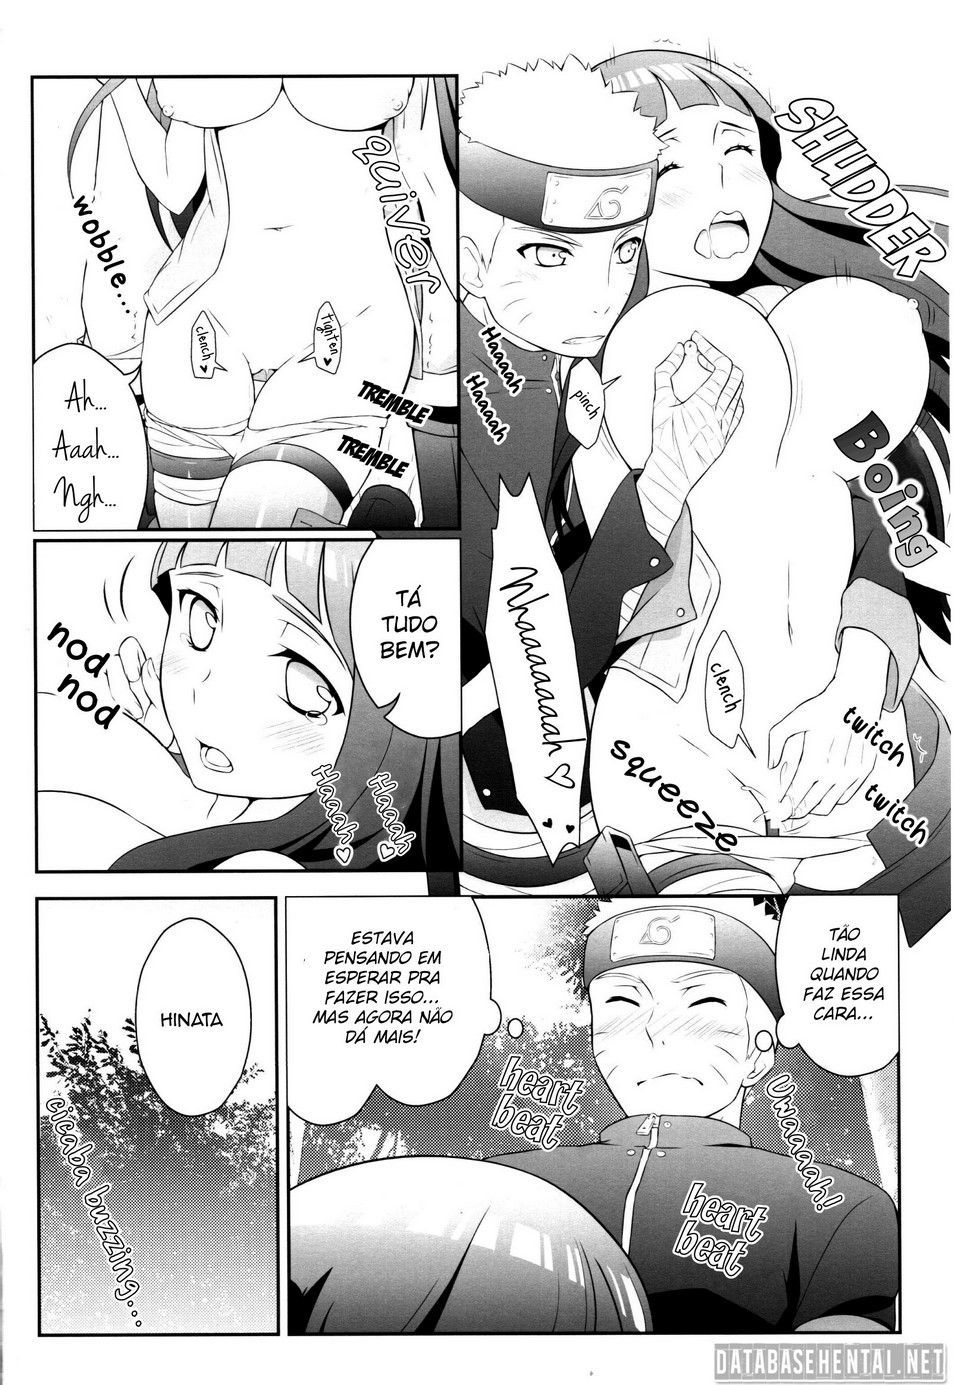 Naruto transa com Hinata na missão - Foto 8